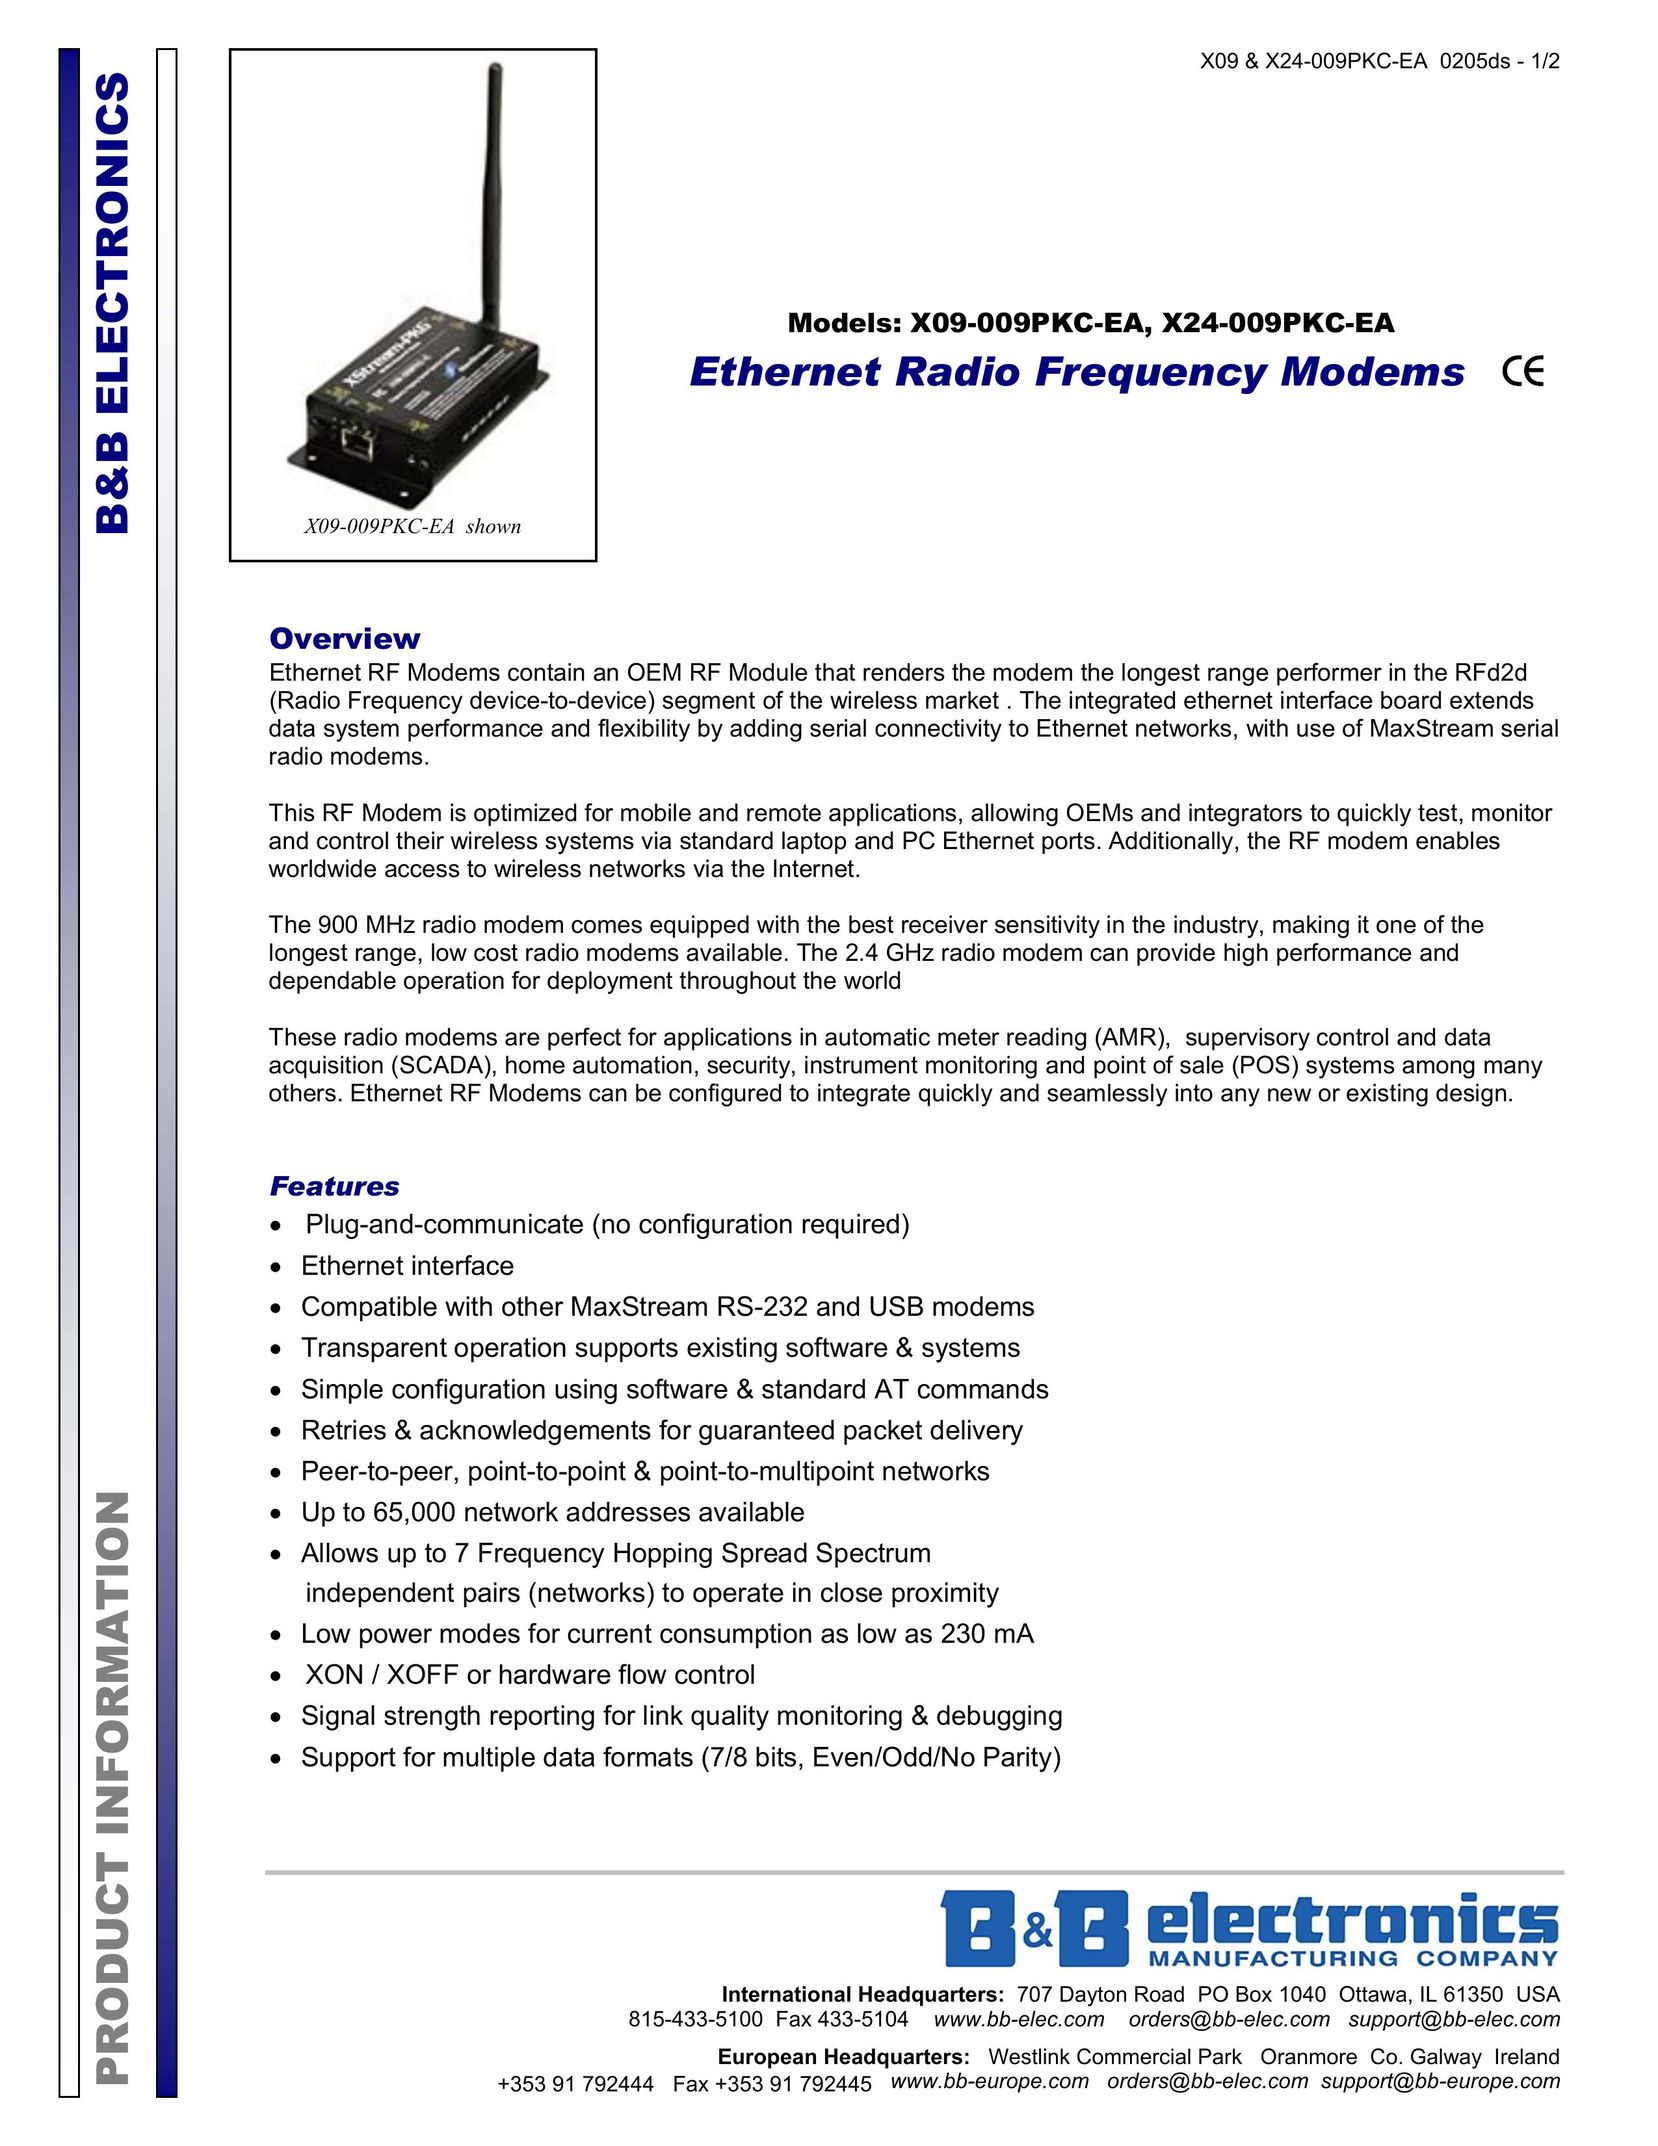 B&B Electronics X09-009PKC-EA Network Router User Manual